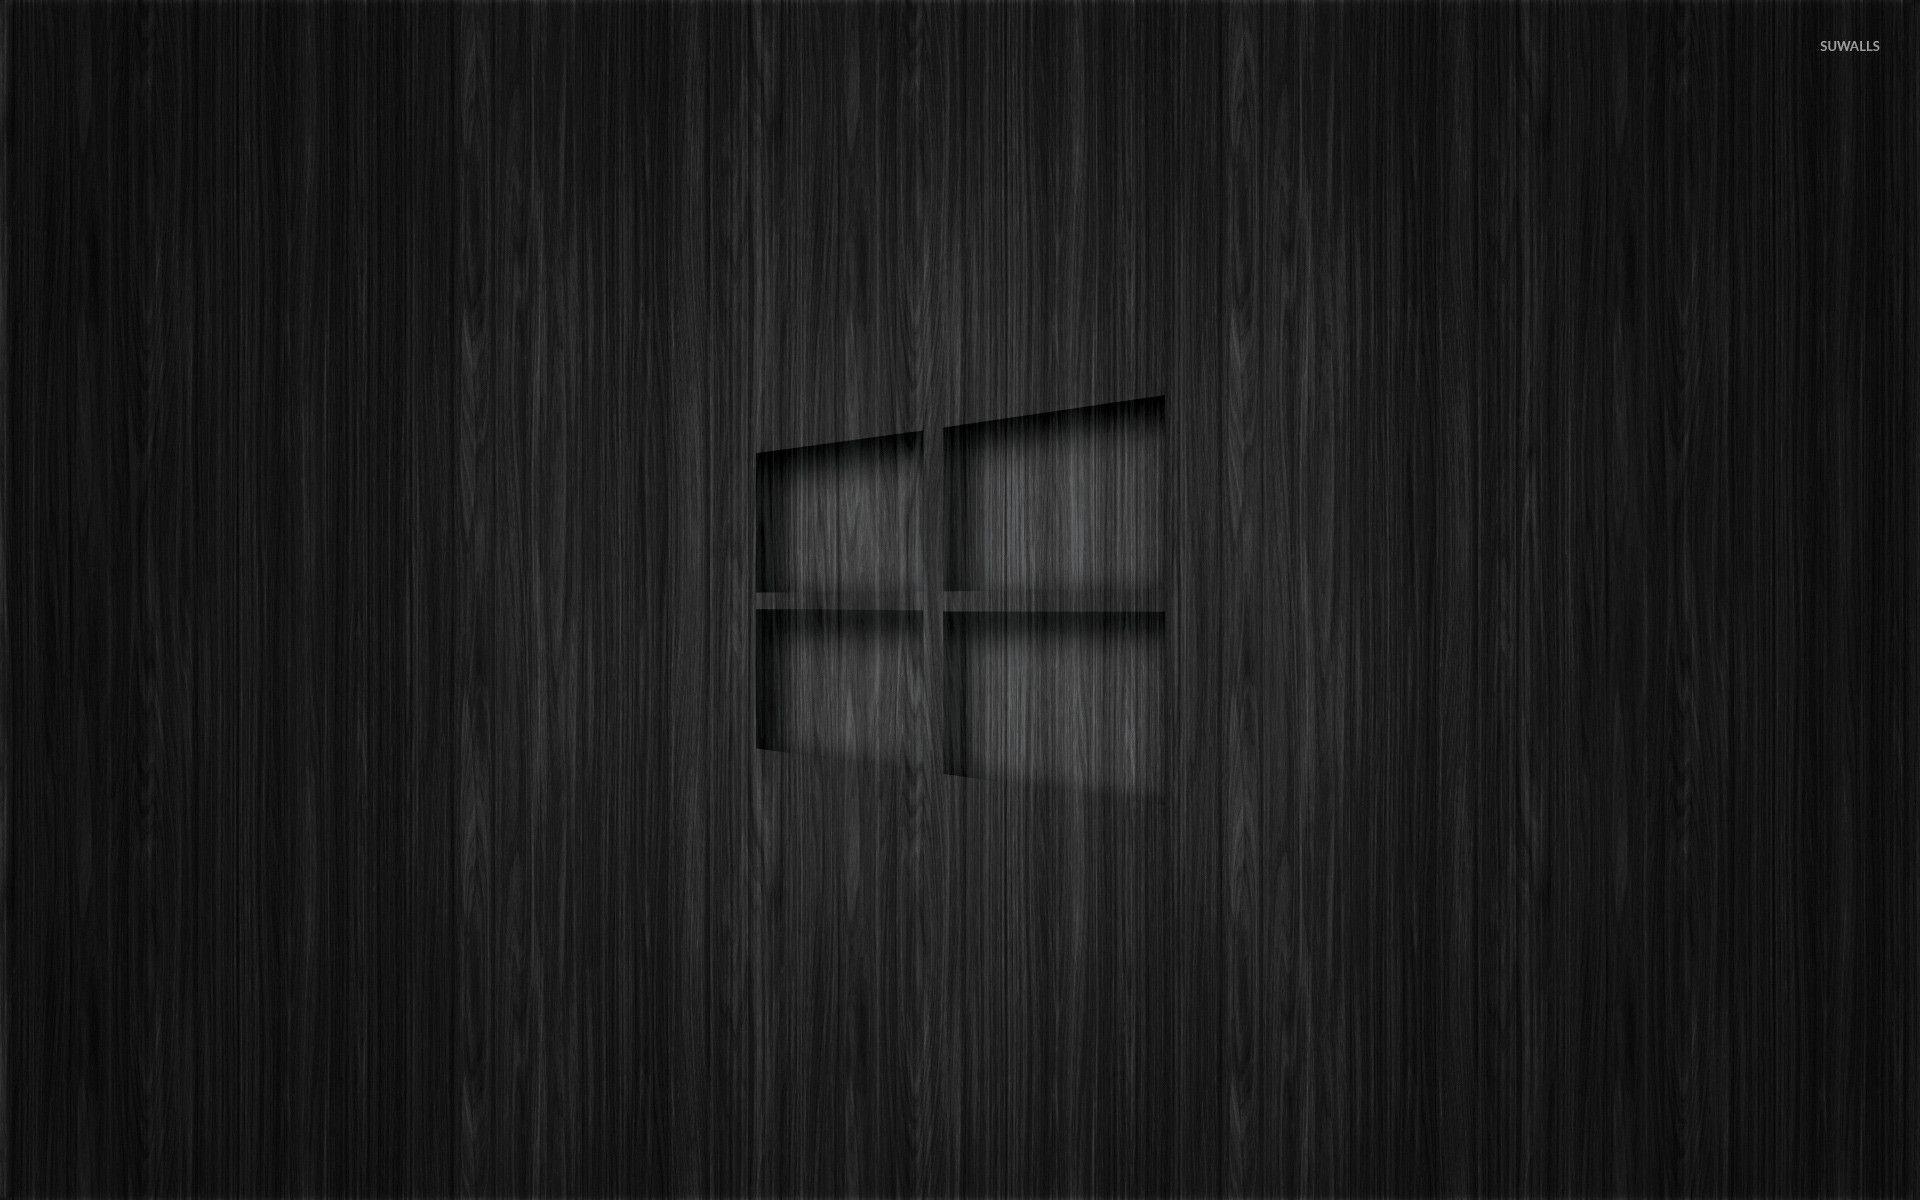 windows 10 themes black and white wallpaper